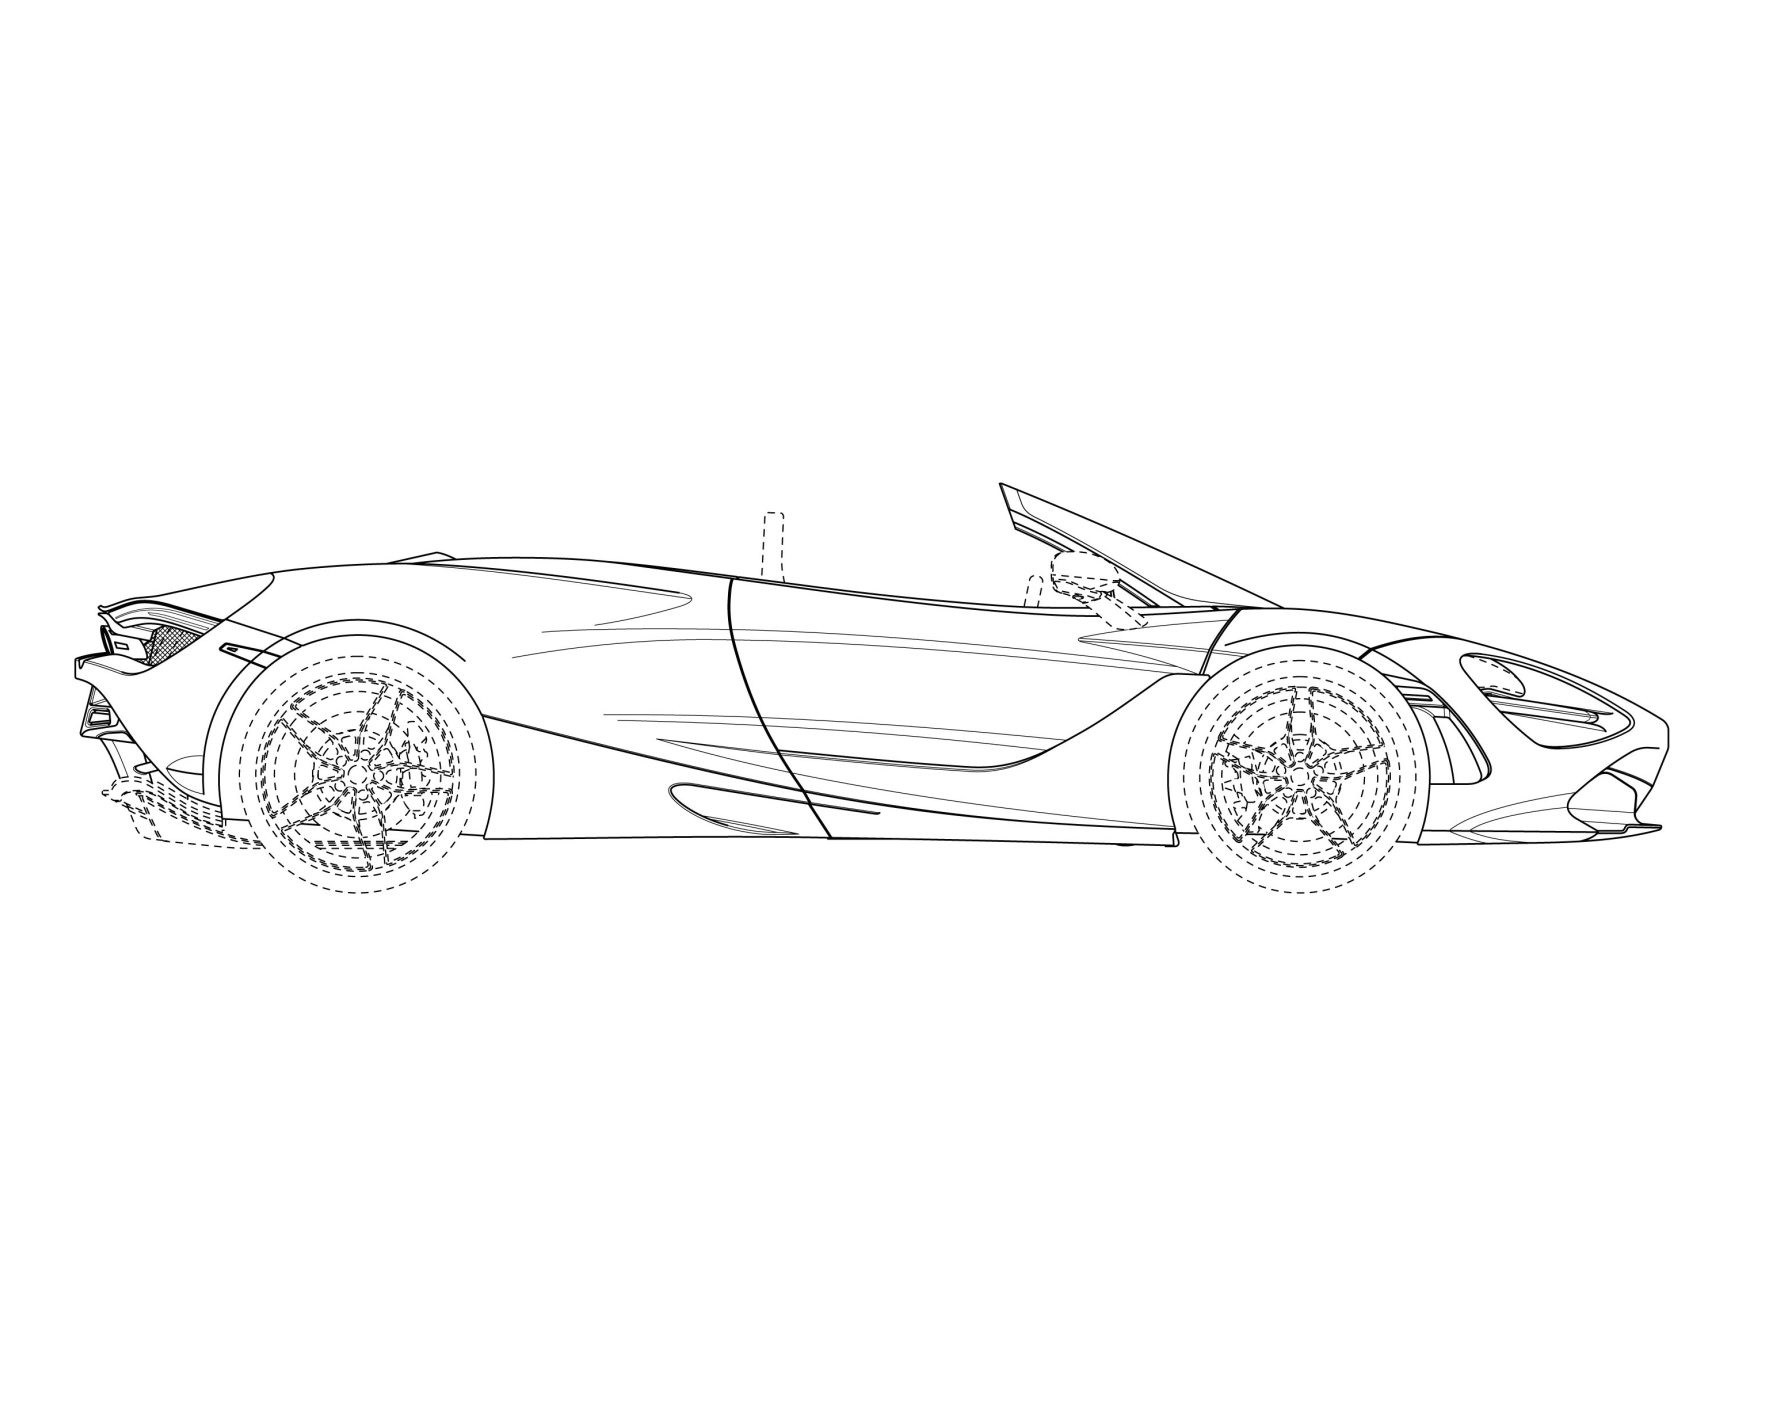 2020 McLaren 720S Spider Revealed By Design Patent - autoevolution